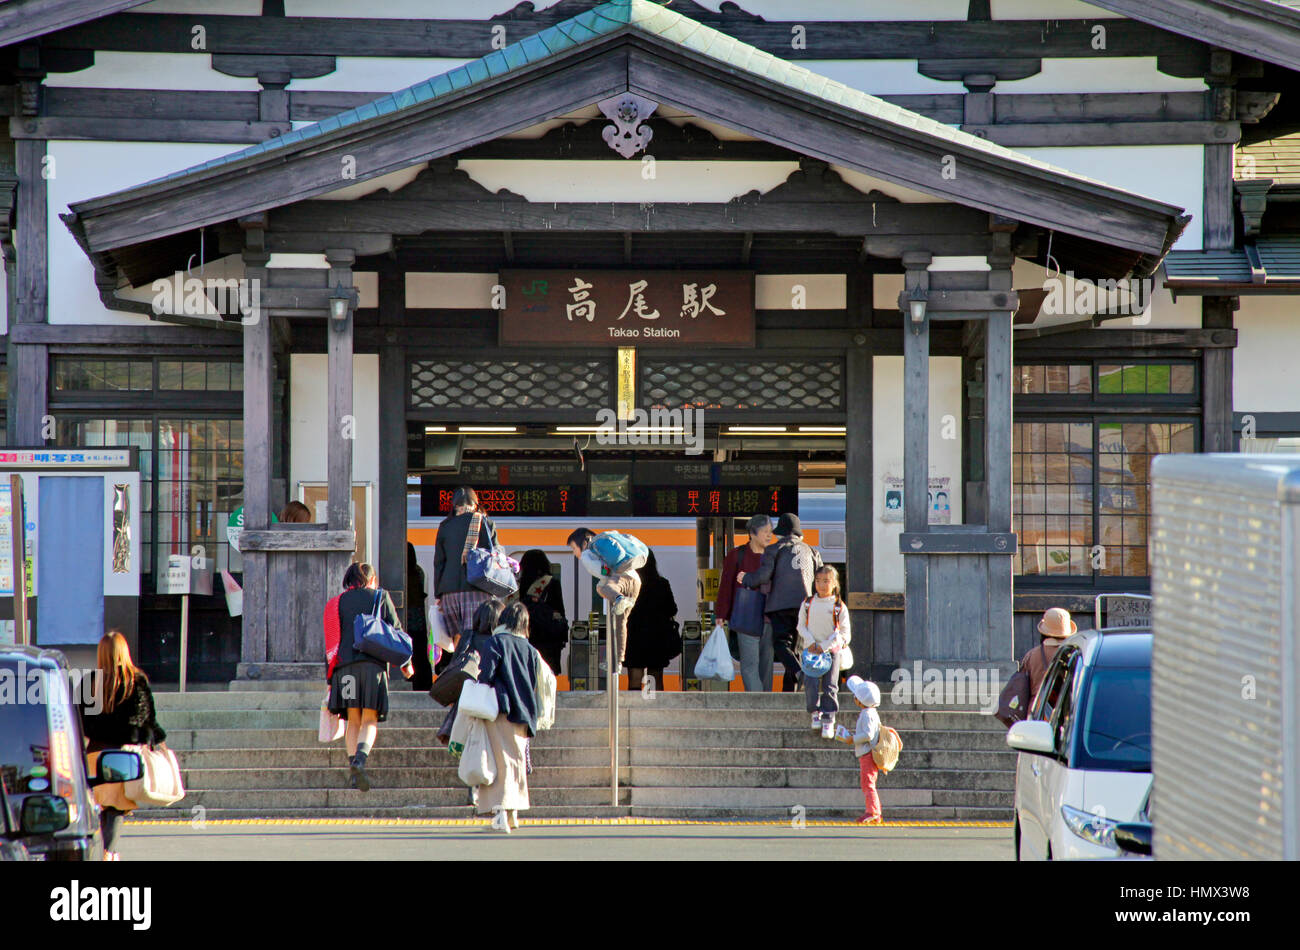 Takao Railway Station Hachioji city Tokyo Japan Stock Photo